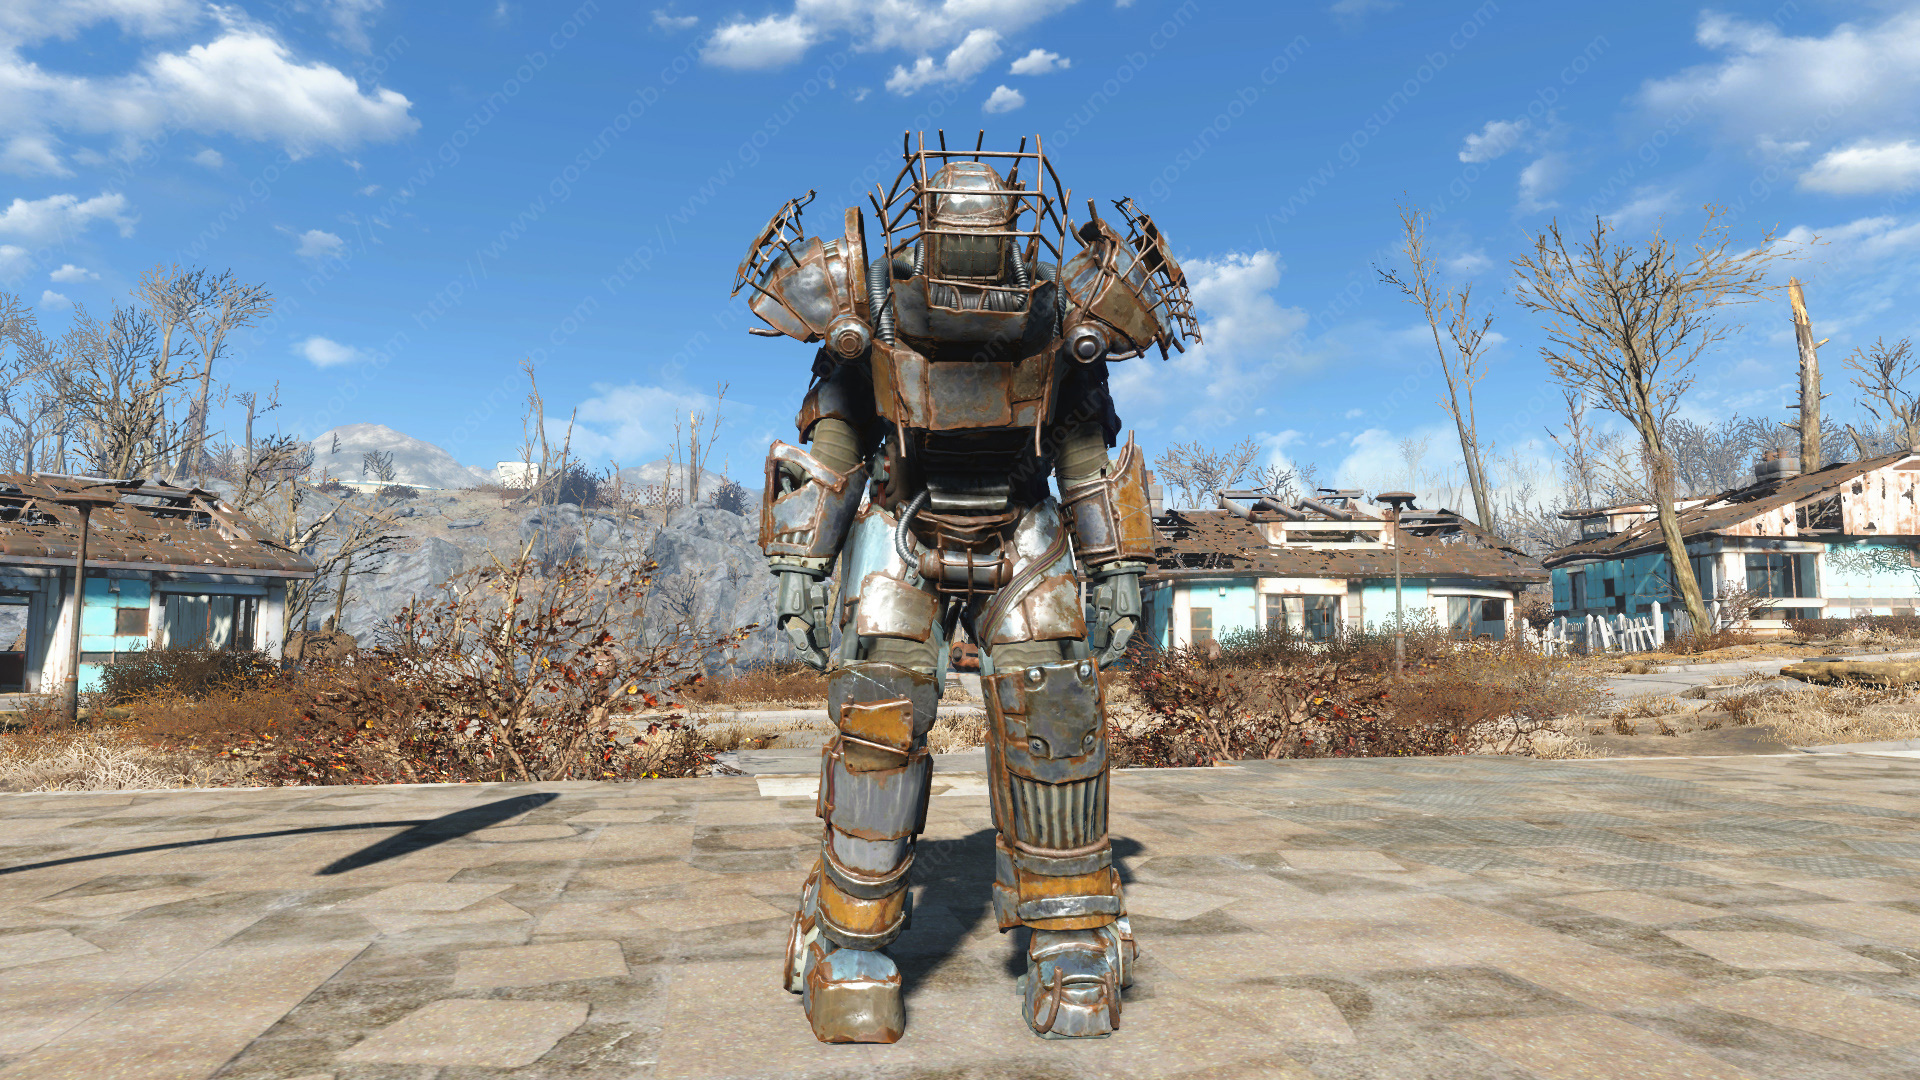 Читы на силовую броню. Фоллаут 4 силовая броня рейдеров. Силовая броня рейдеров Fallout 4. Фоллаут 4 броня рейдеров. Fallout 4 Raider Armor.